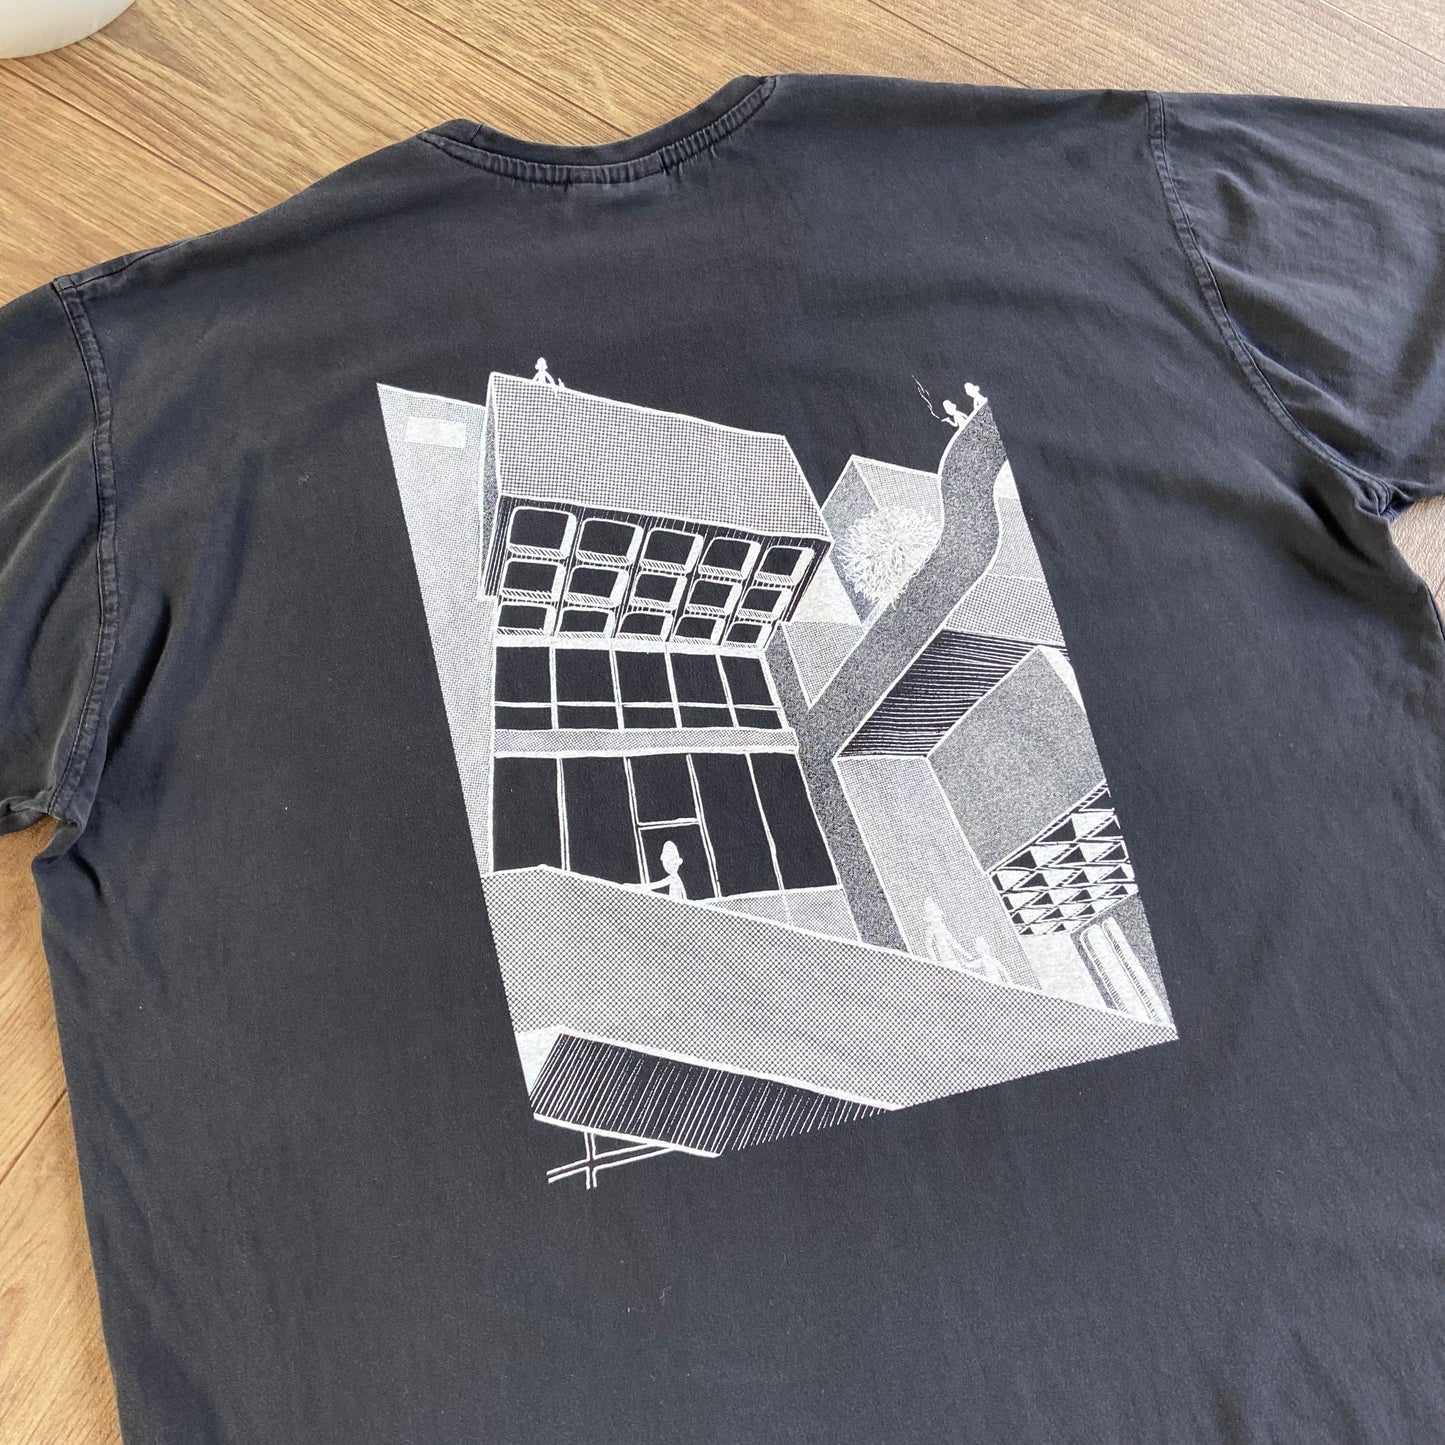 Stingray Reimagined “Barbican” T Shirt, Size XXL Black